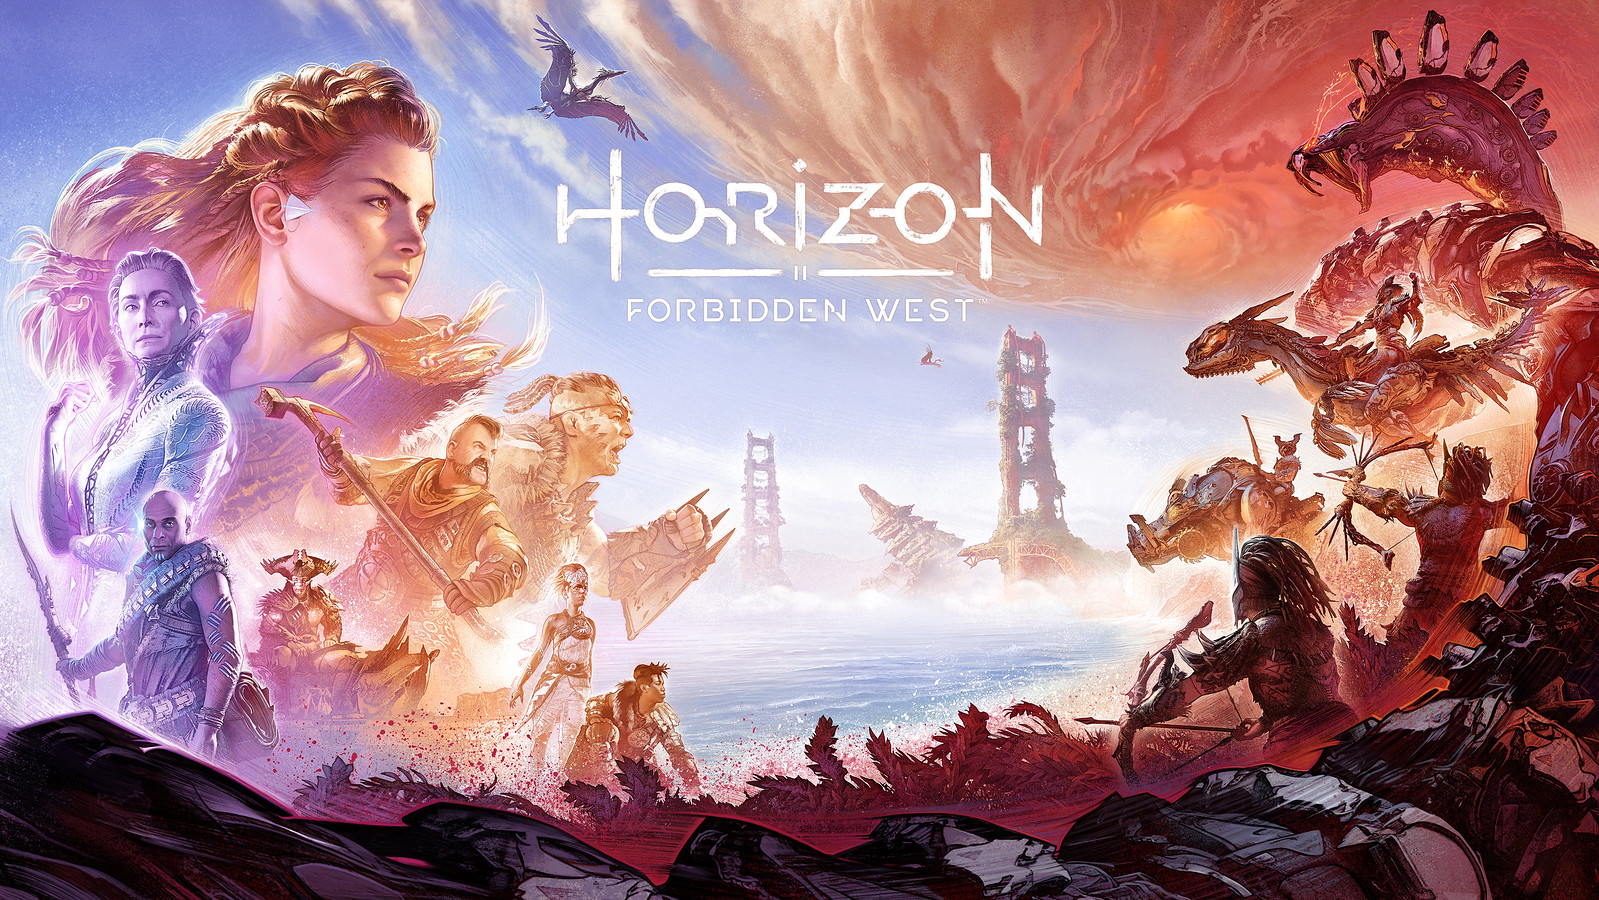 Horizon Forbidden West reportedly delayed into 2022